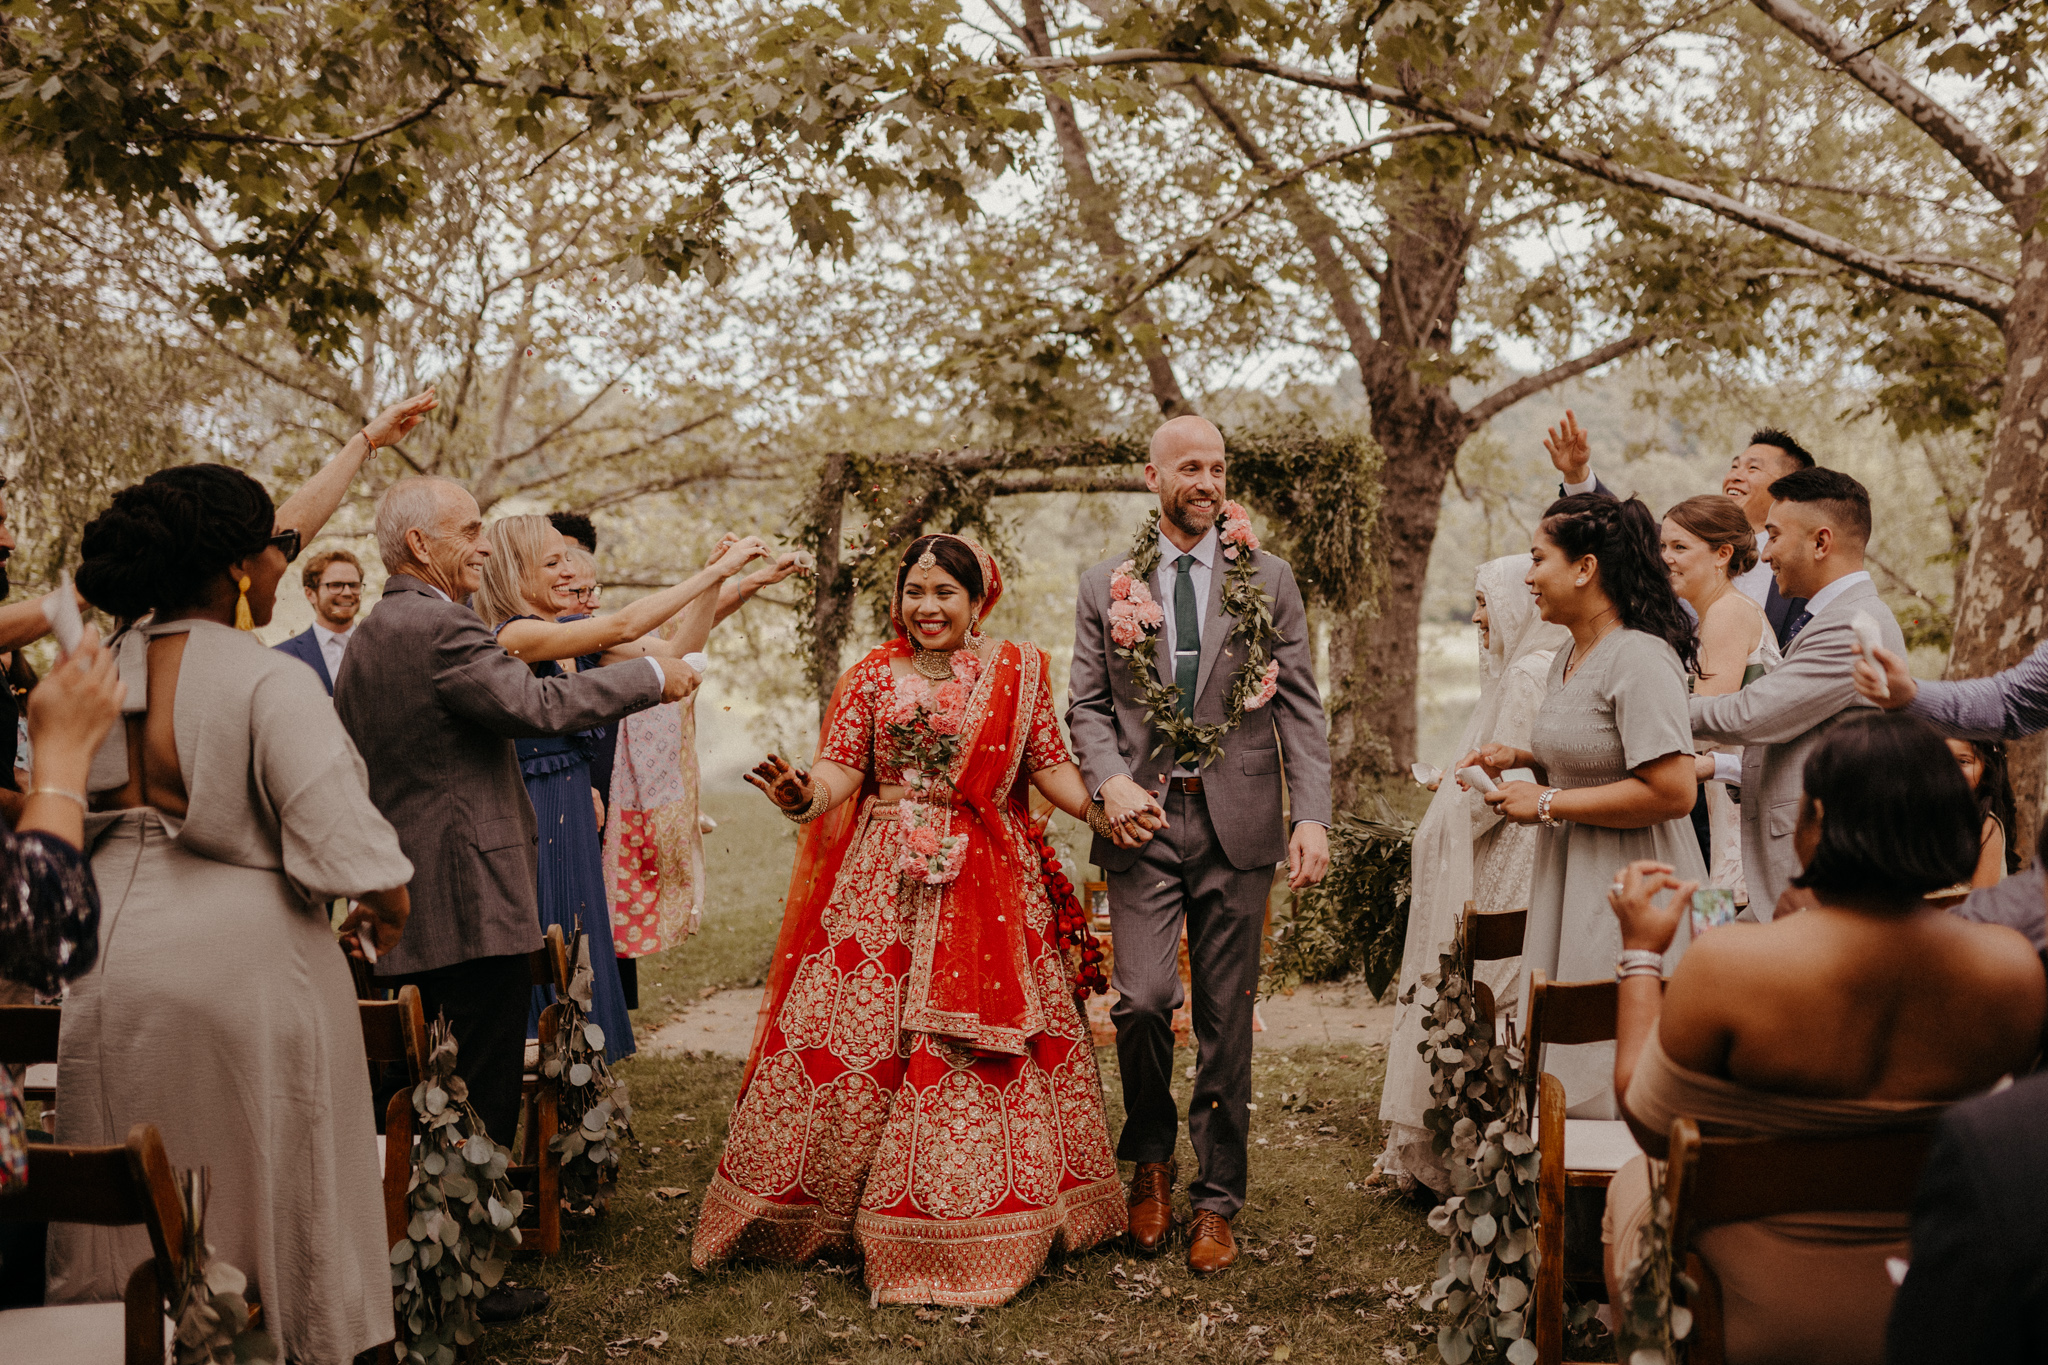 South Asian & Western fusion wedding inspiration ideas at Big Spring Farm in Lexington, Virginia // moody candid wedding photographer